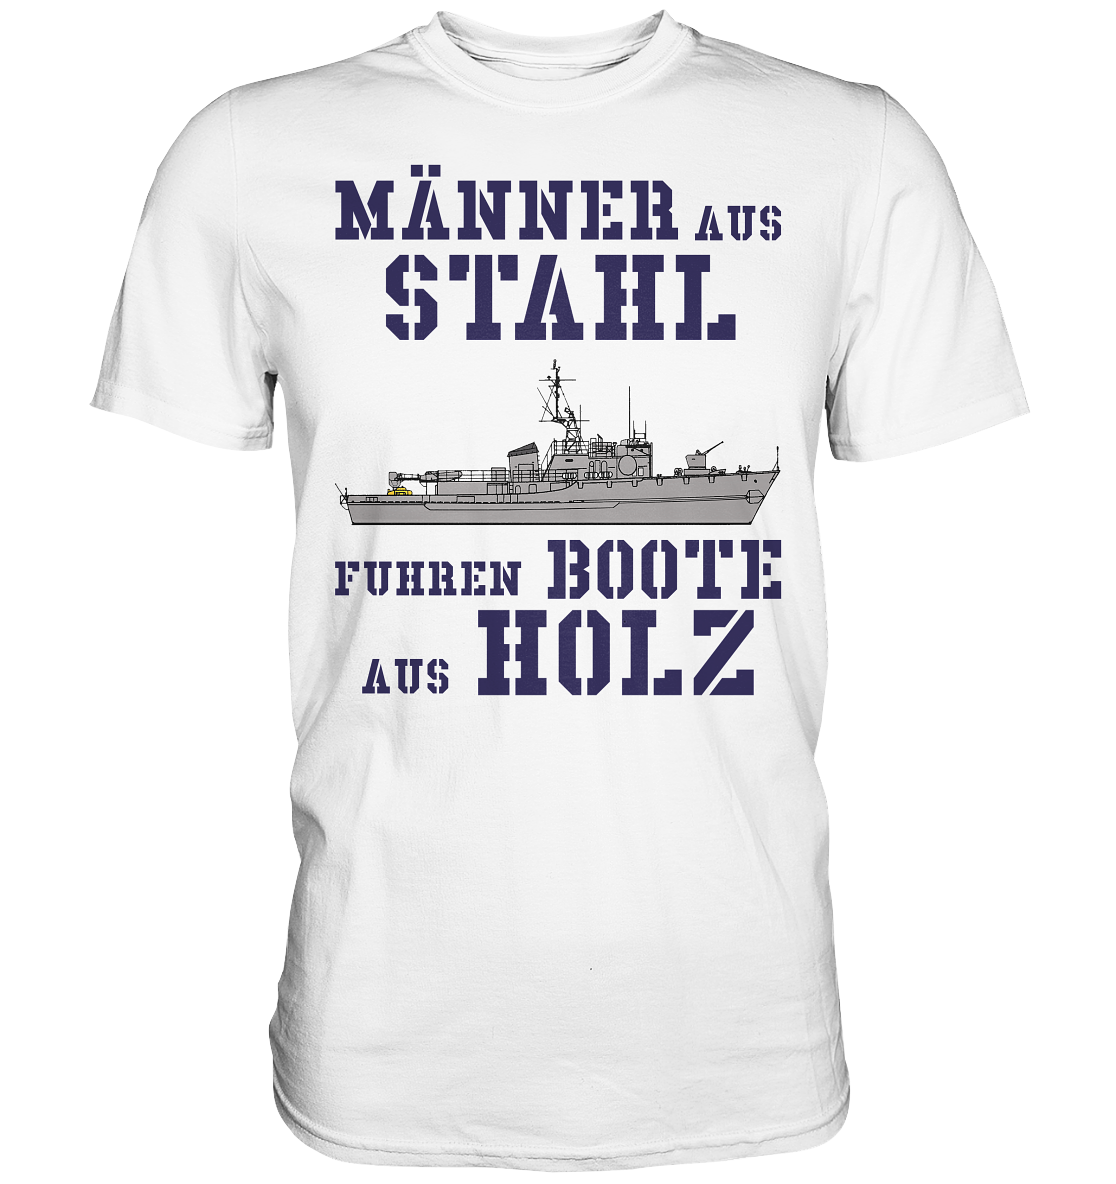 Männer aus Stahl...  Mij.-Boot LINDAU-Klasse - Premium Shirt